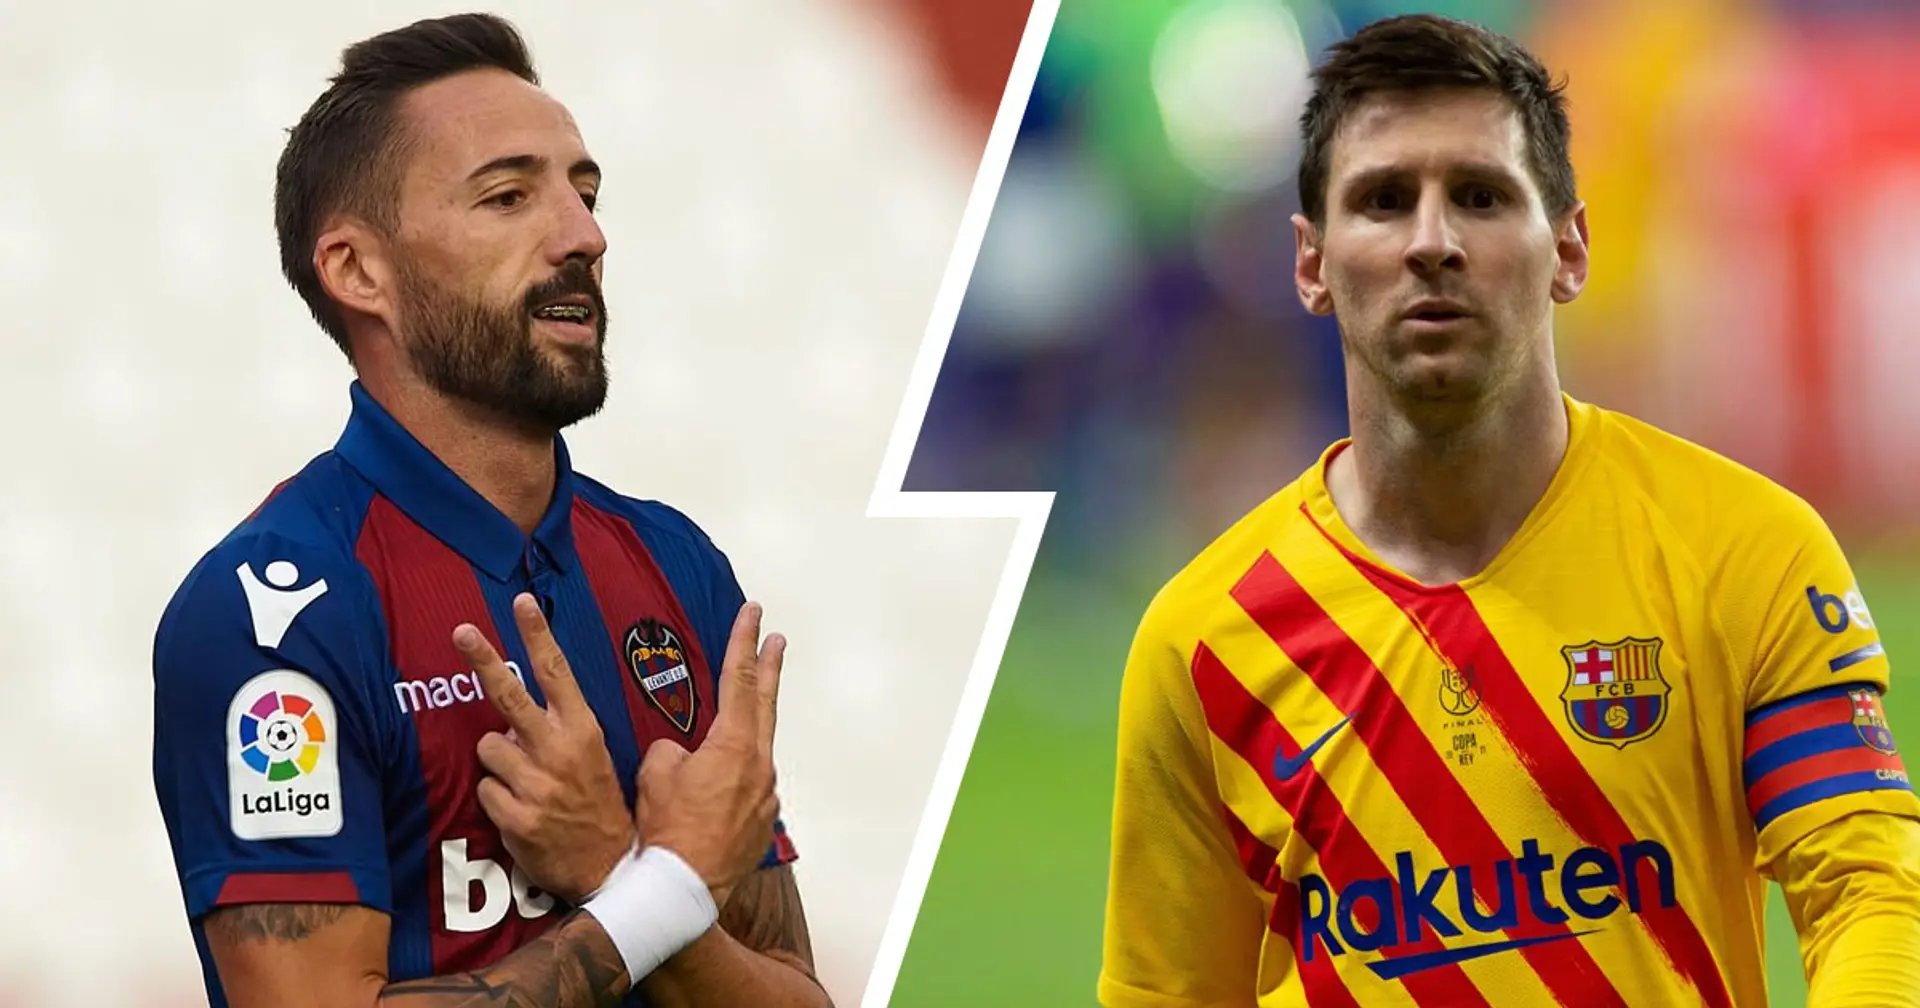 Levante vs Barcelona: team news, probable line-ups, score predictions & more – preview